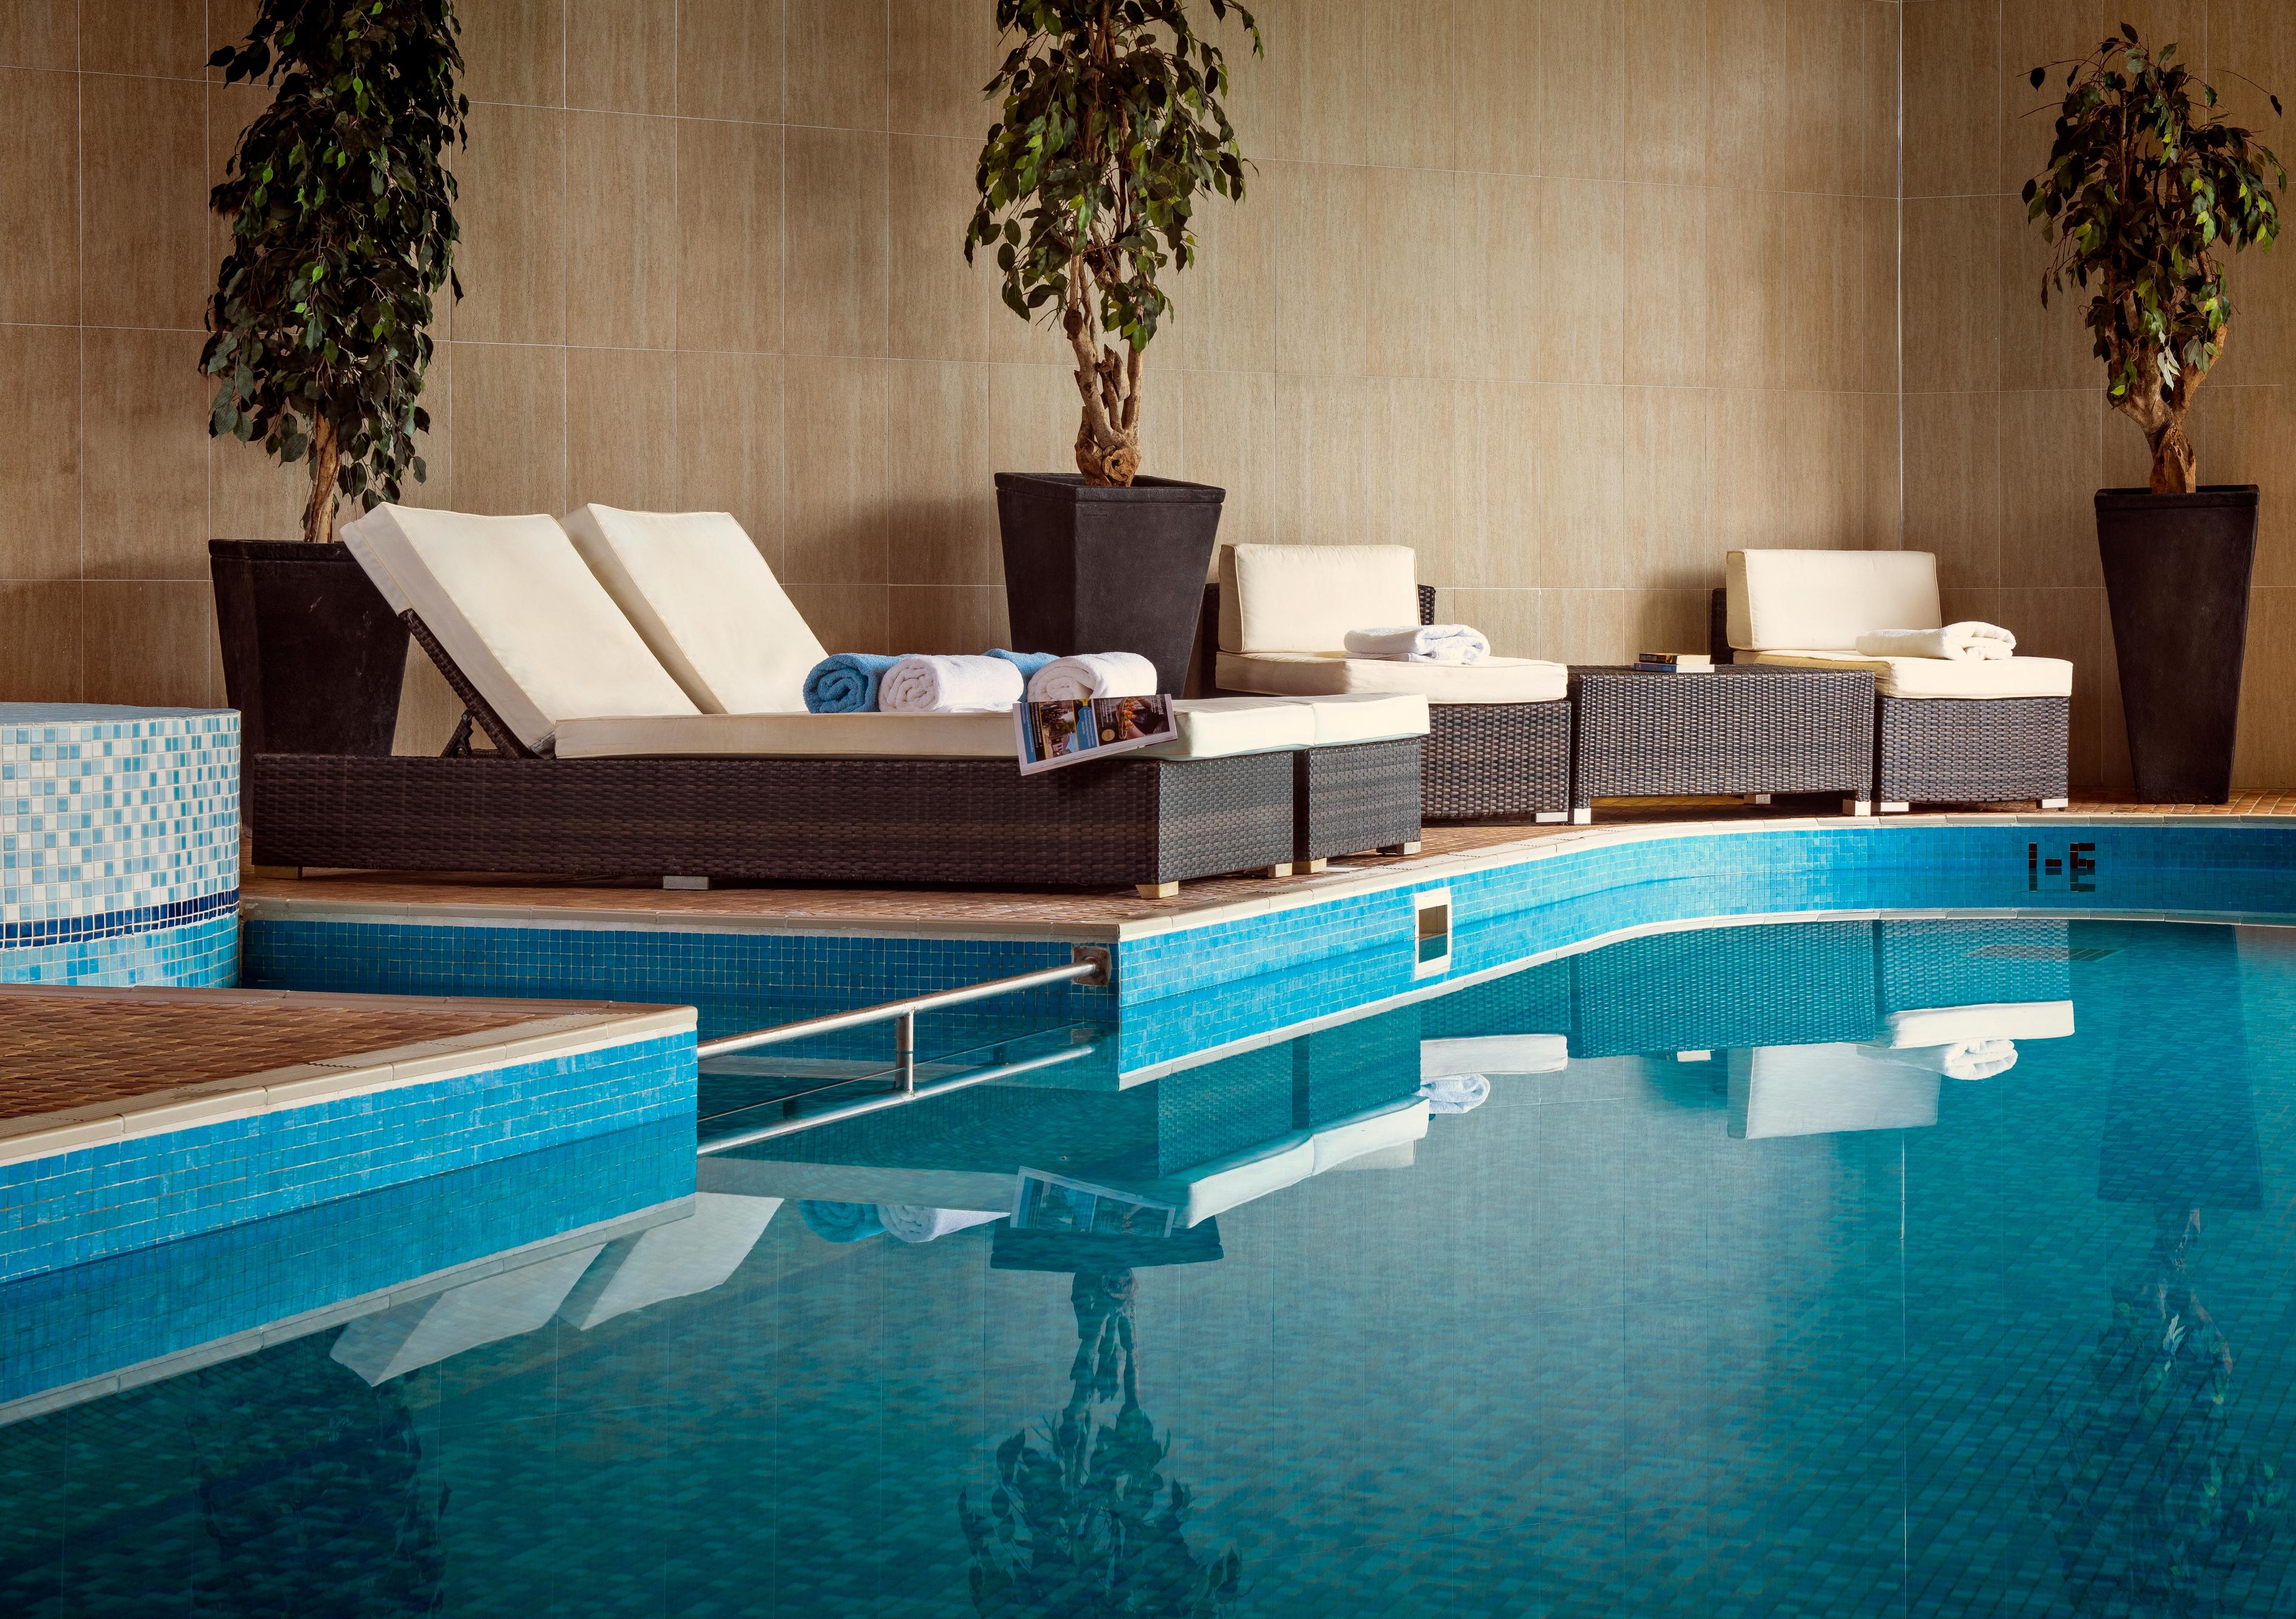 Balmer Lawn hotel swimming pool